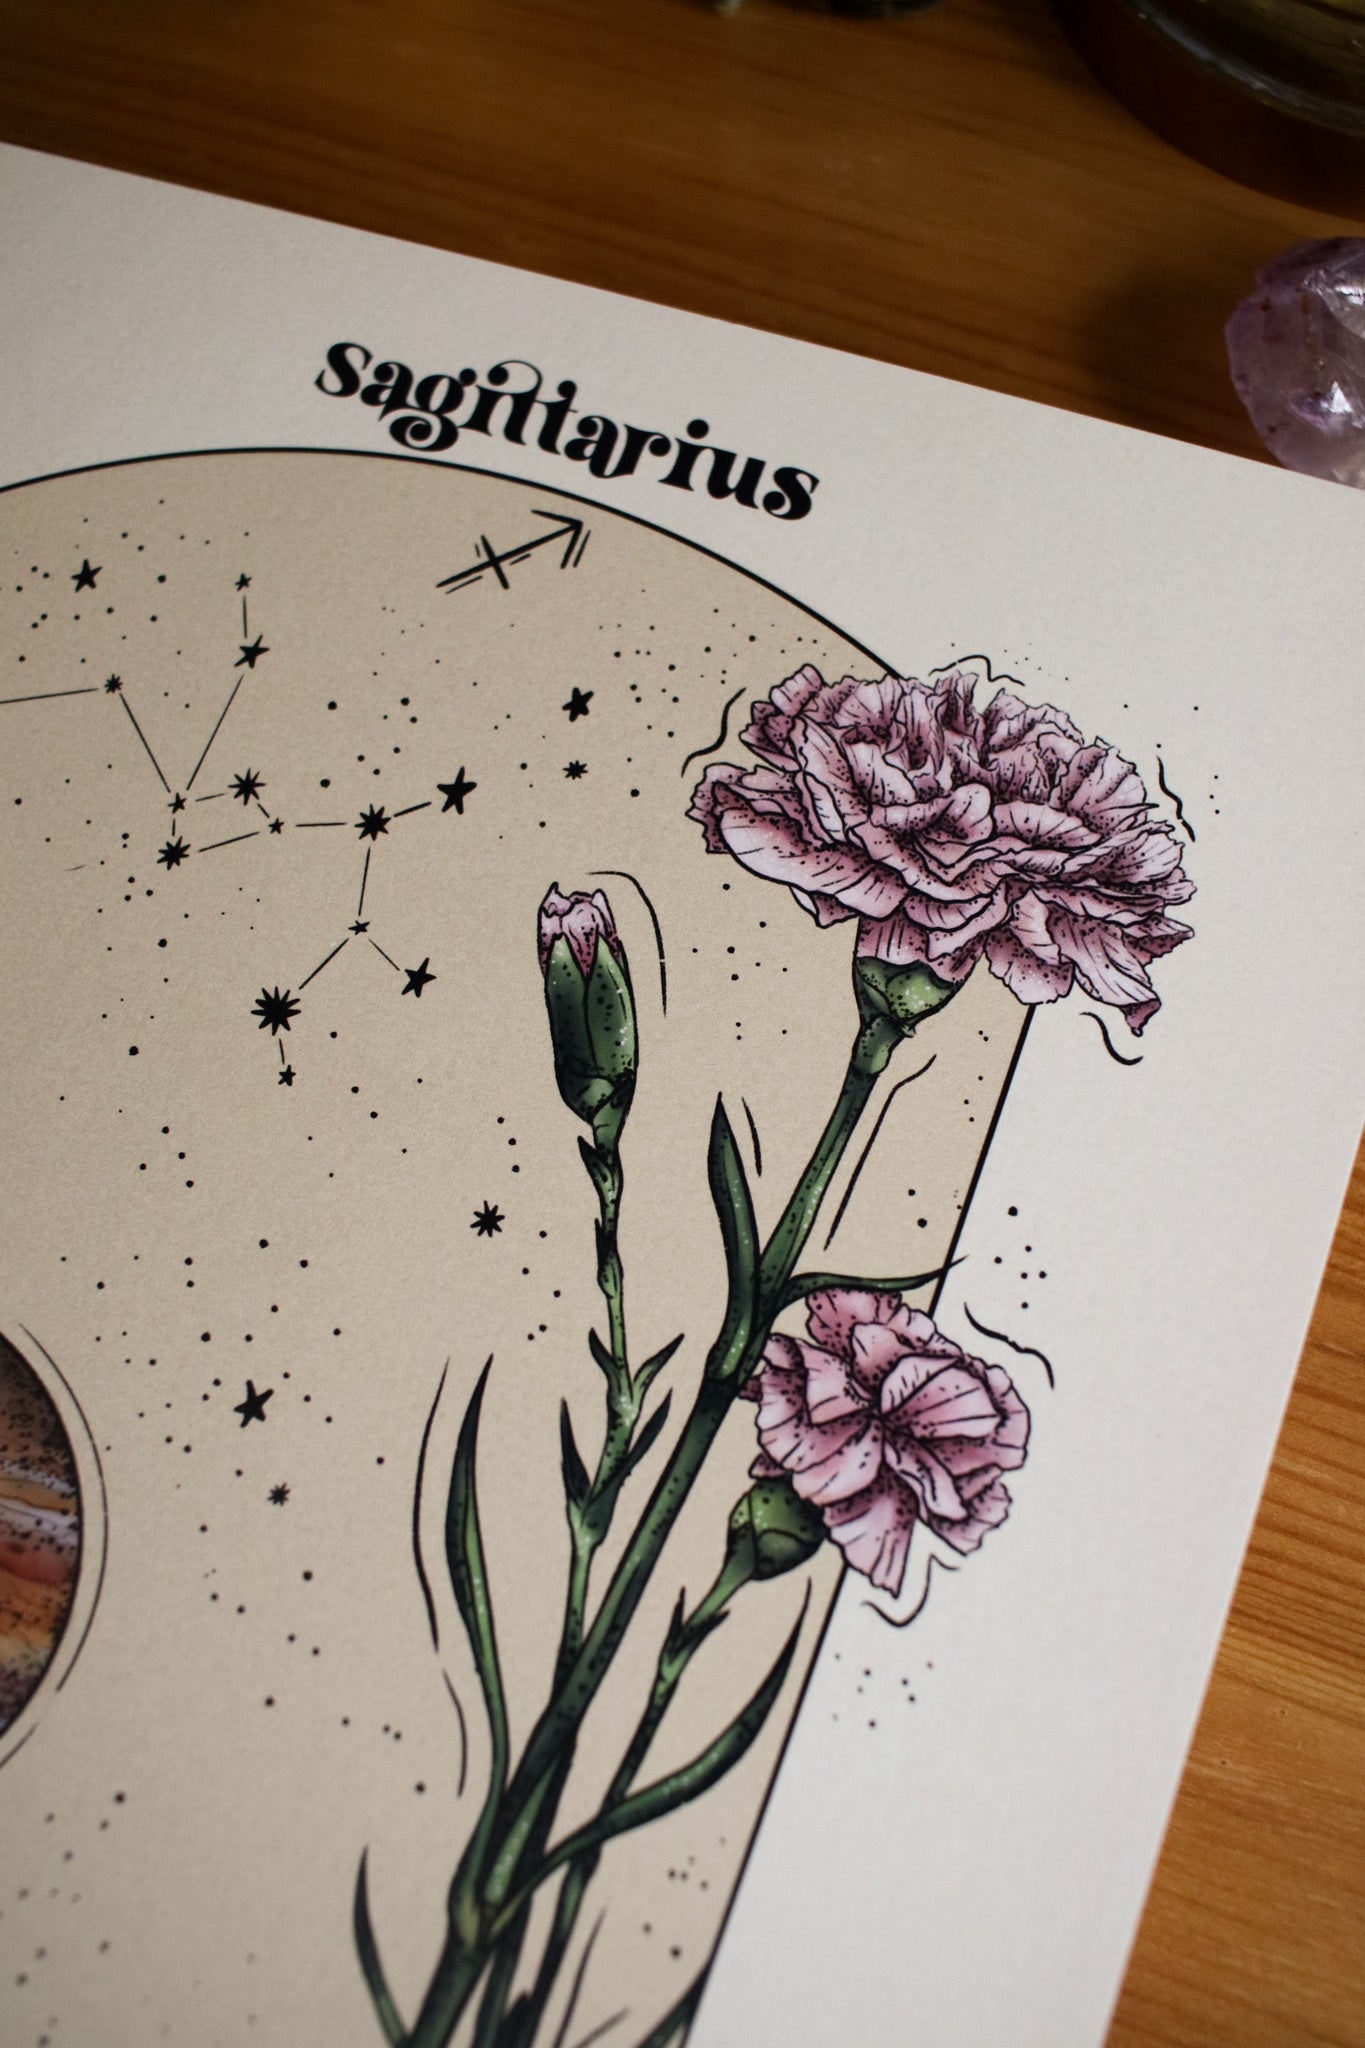 Sagittarius - Astrology Infographic